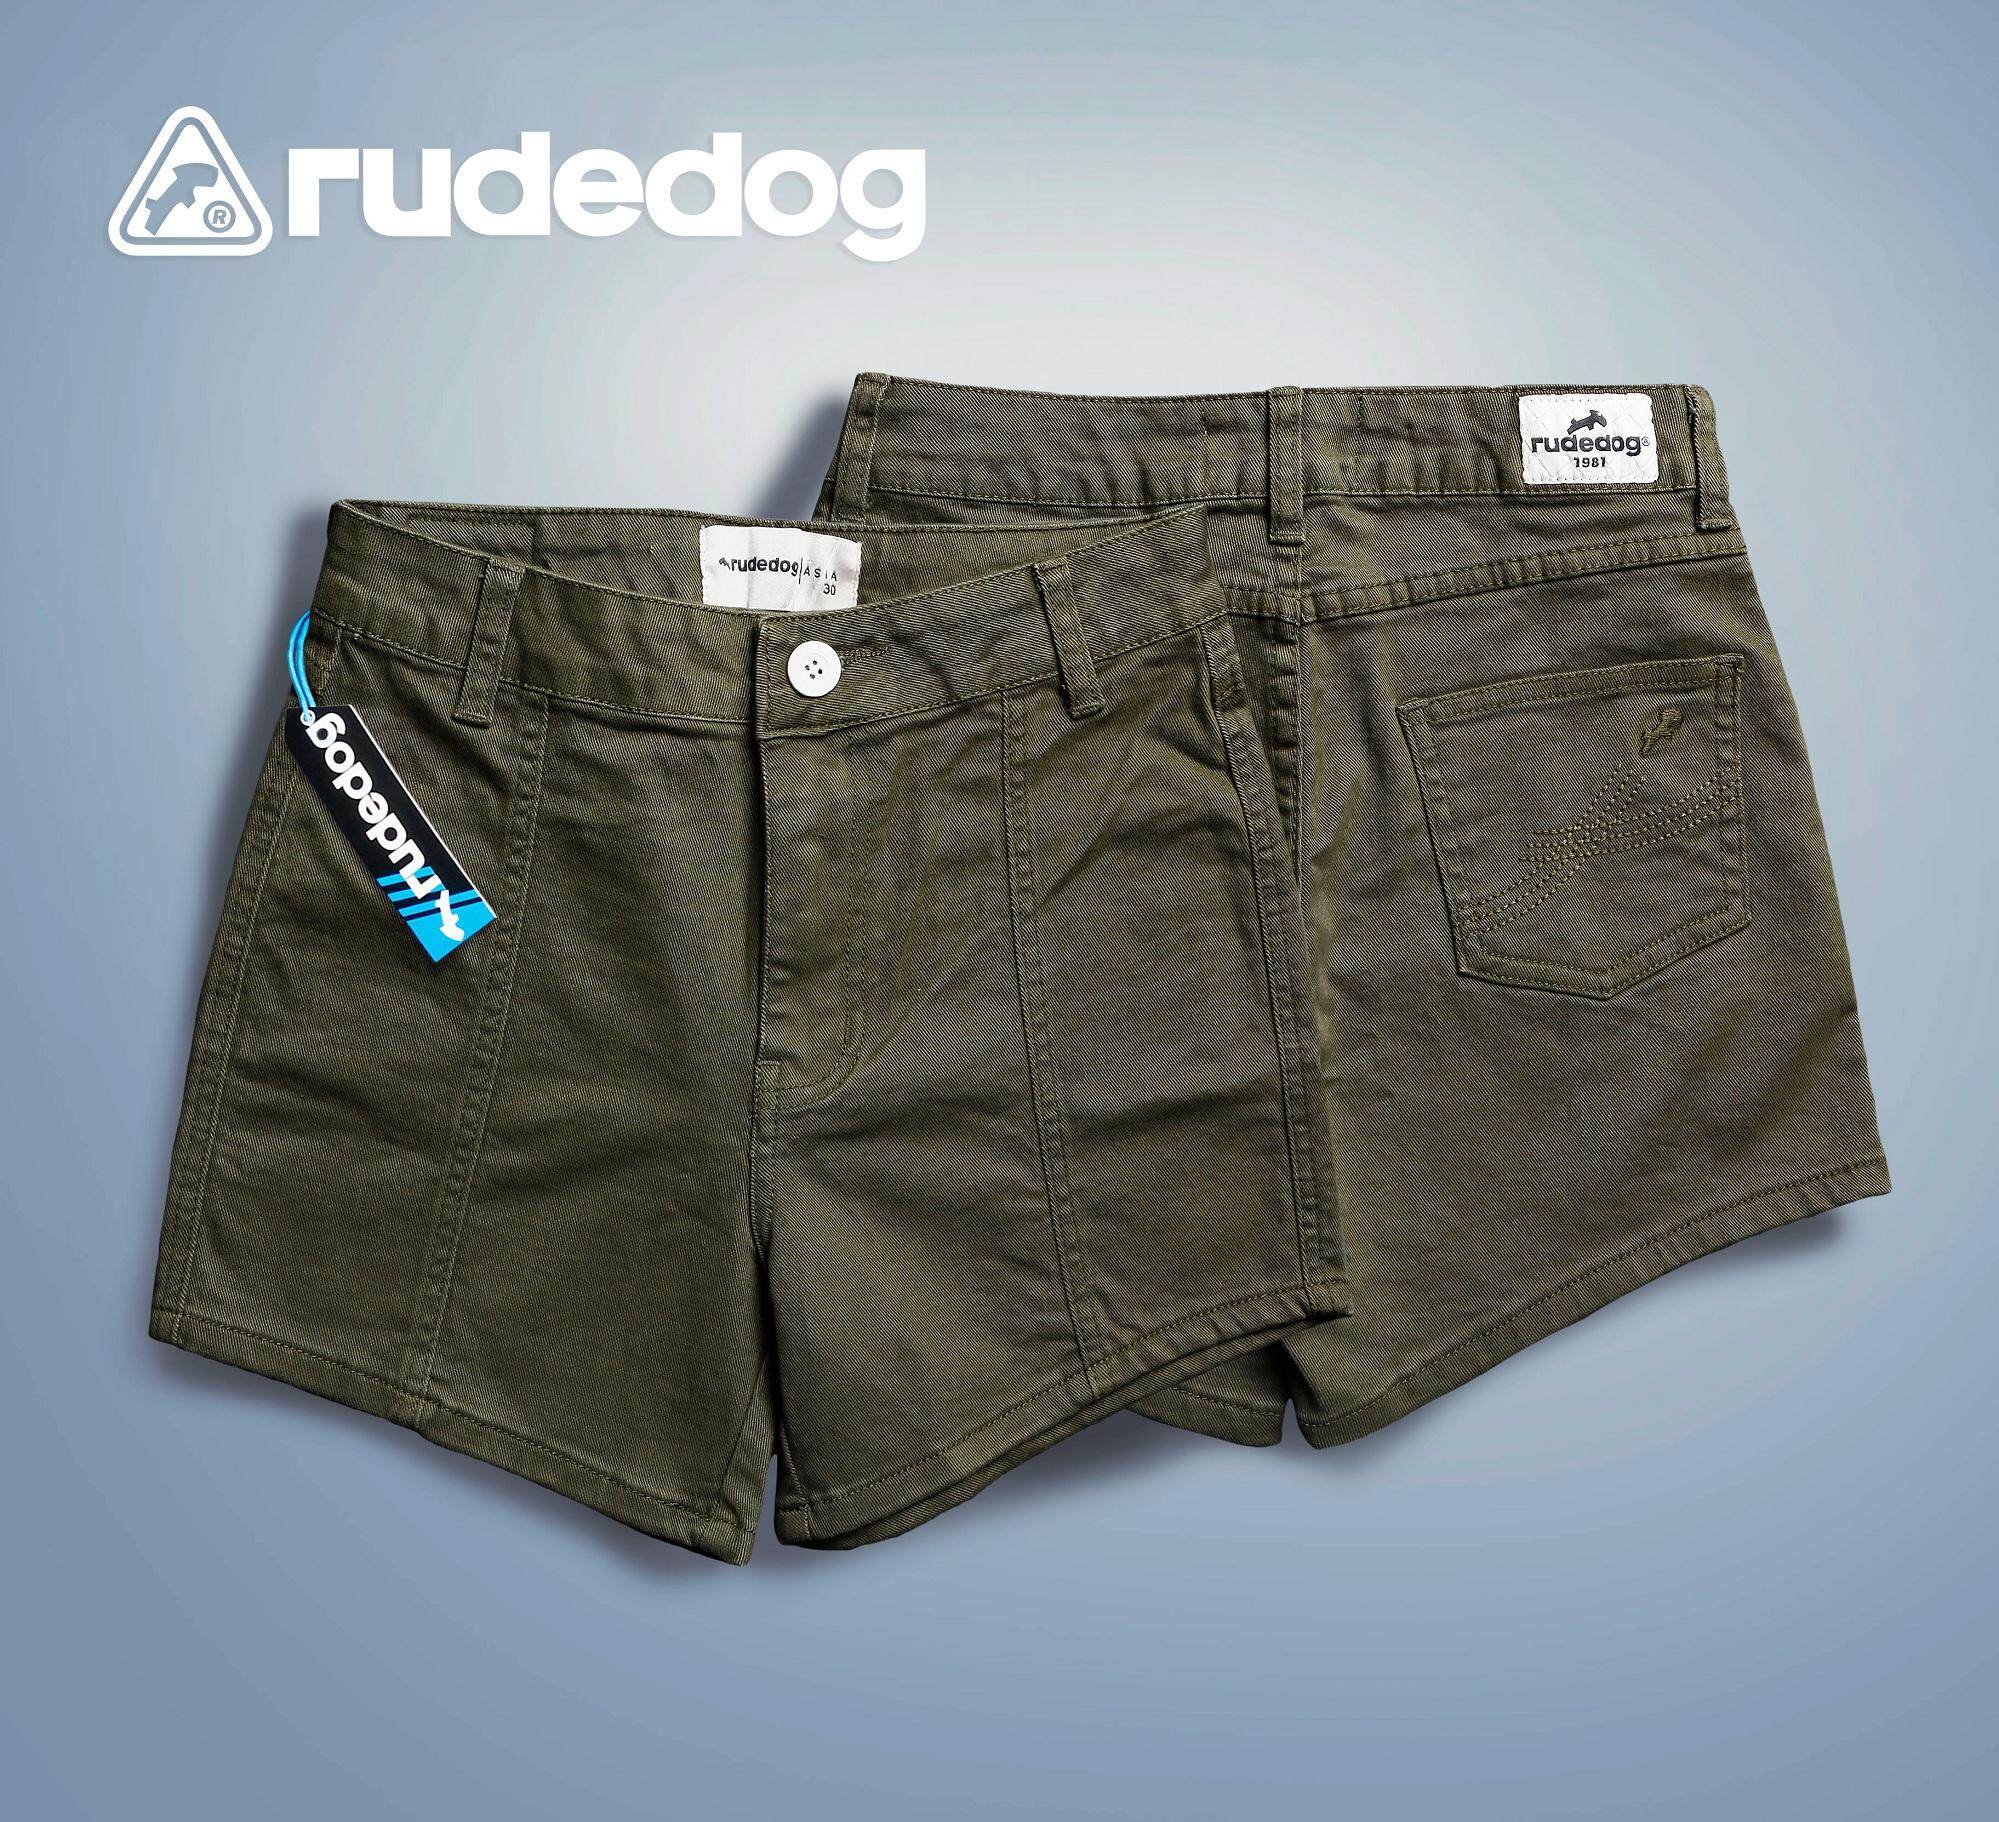 Rudedog กางเกงขาสั้น ผู้หญิง รุ่น ChillDay (Women)